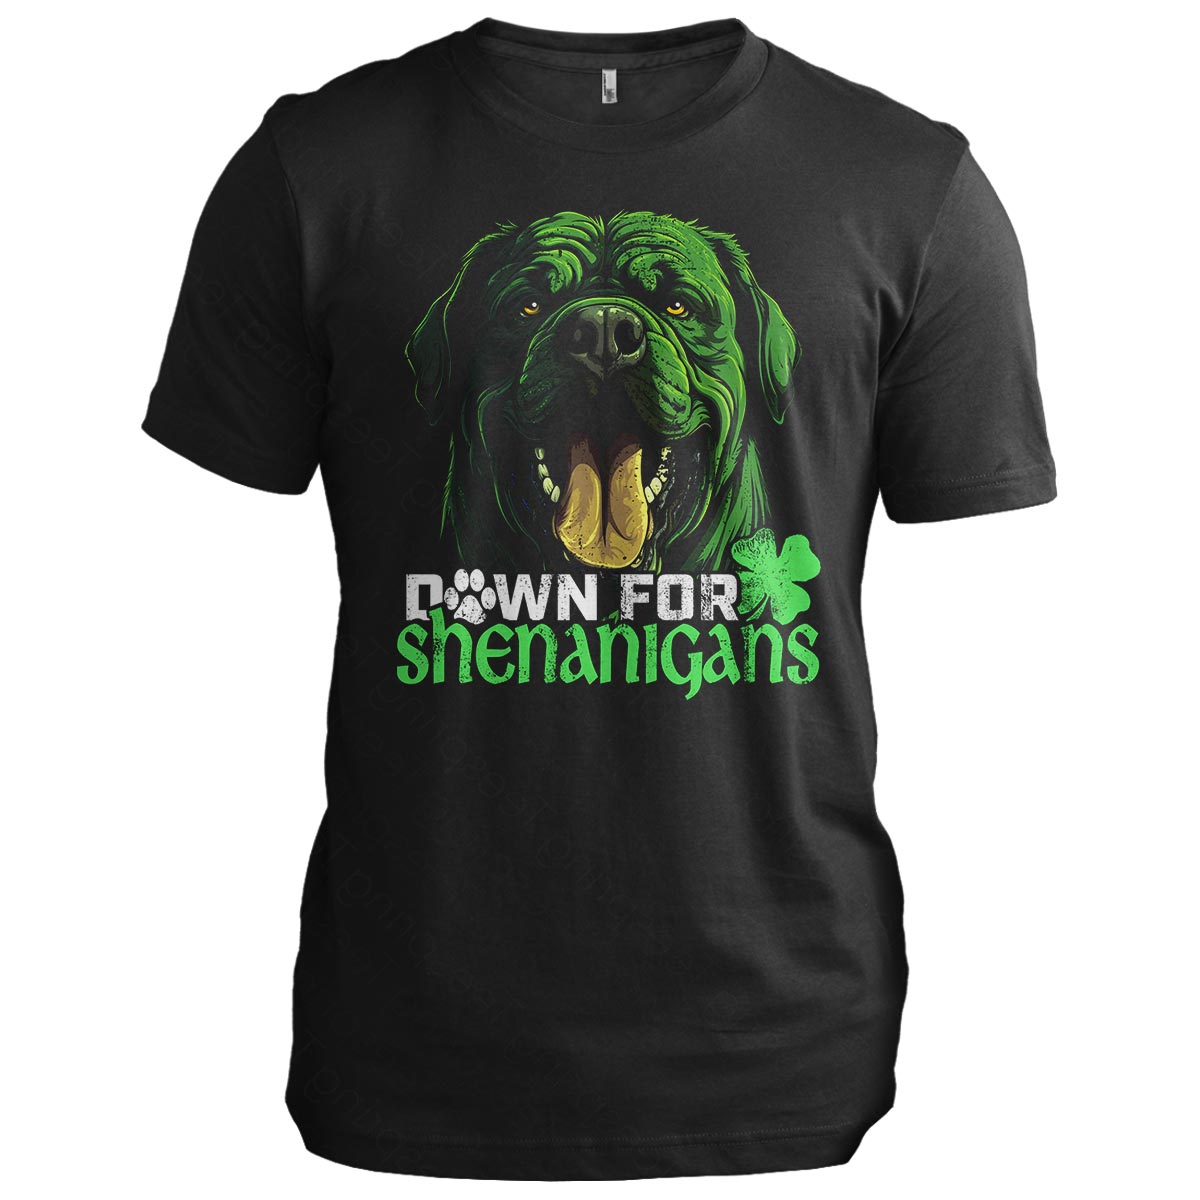 Down for Shenanigans: Mastiff